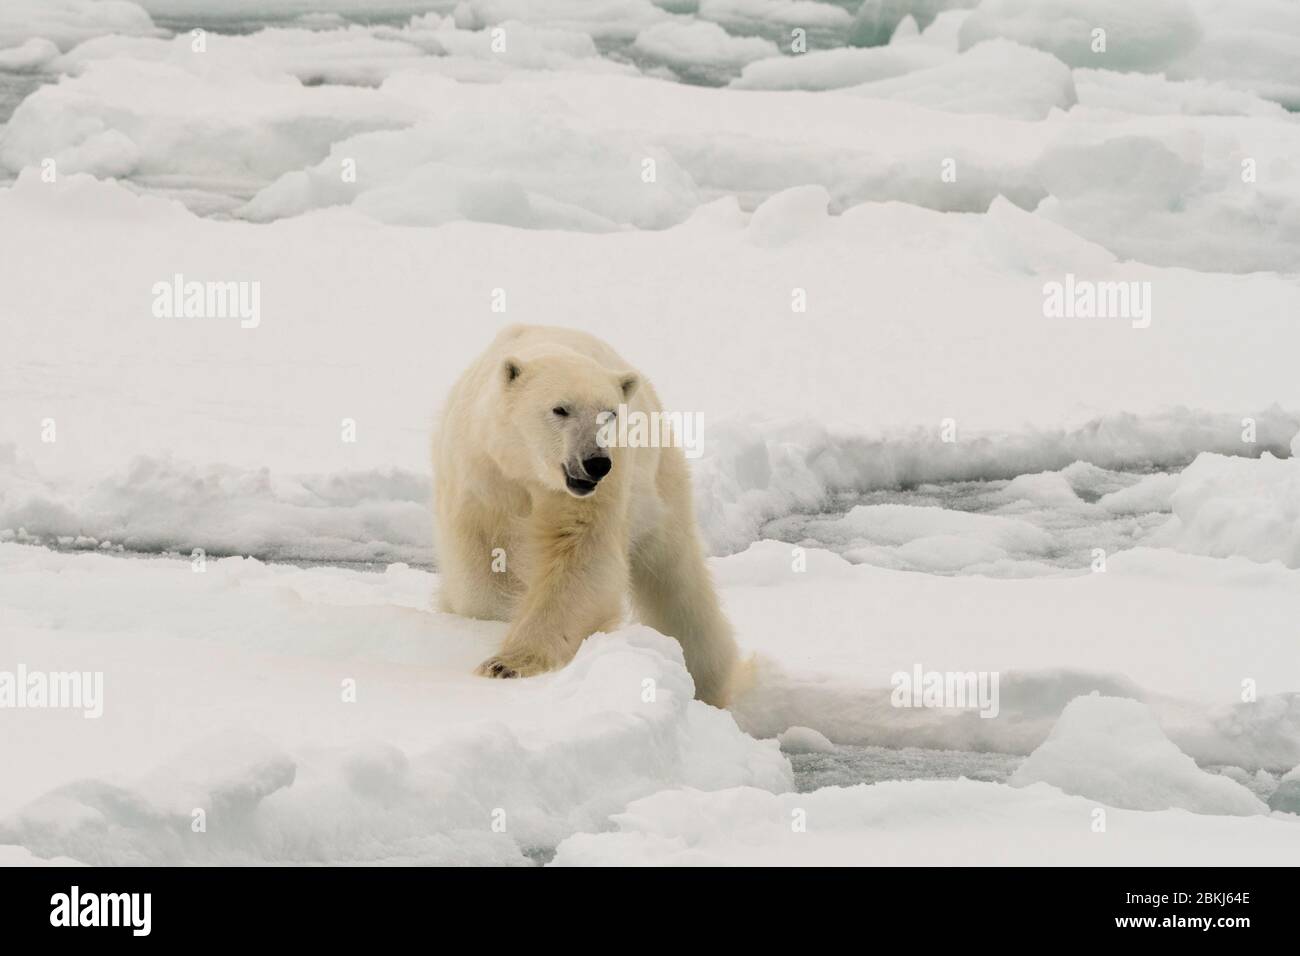 Polar bear (Ursus maritimus), Polar Ice Cap, 81north of Spitsbergen, Norway Stock Photo